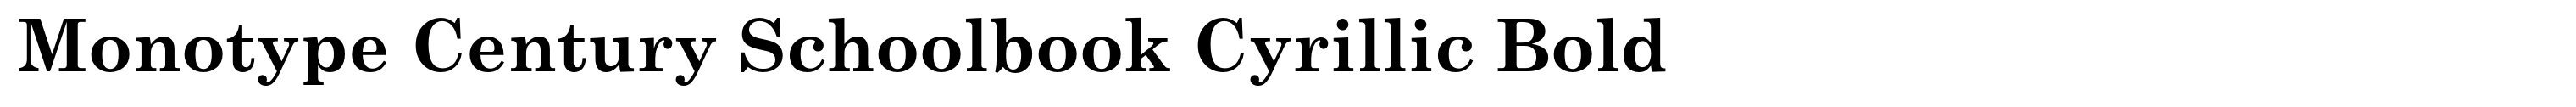 Monotype Century Schoolbook Cyrillic Bold